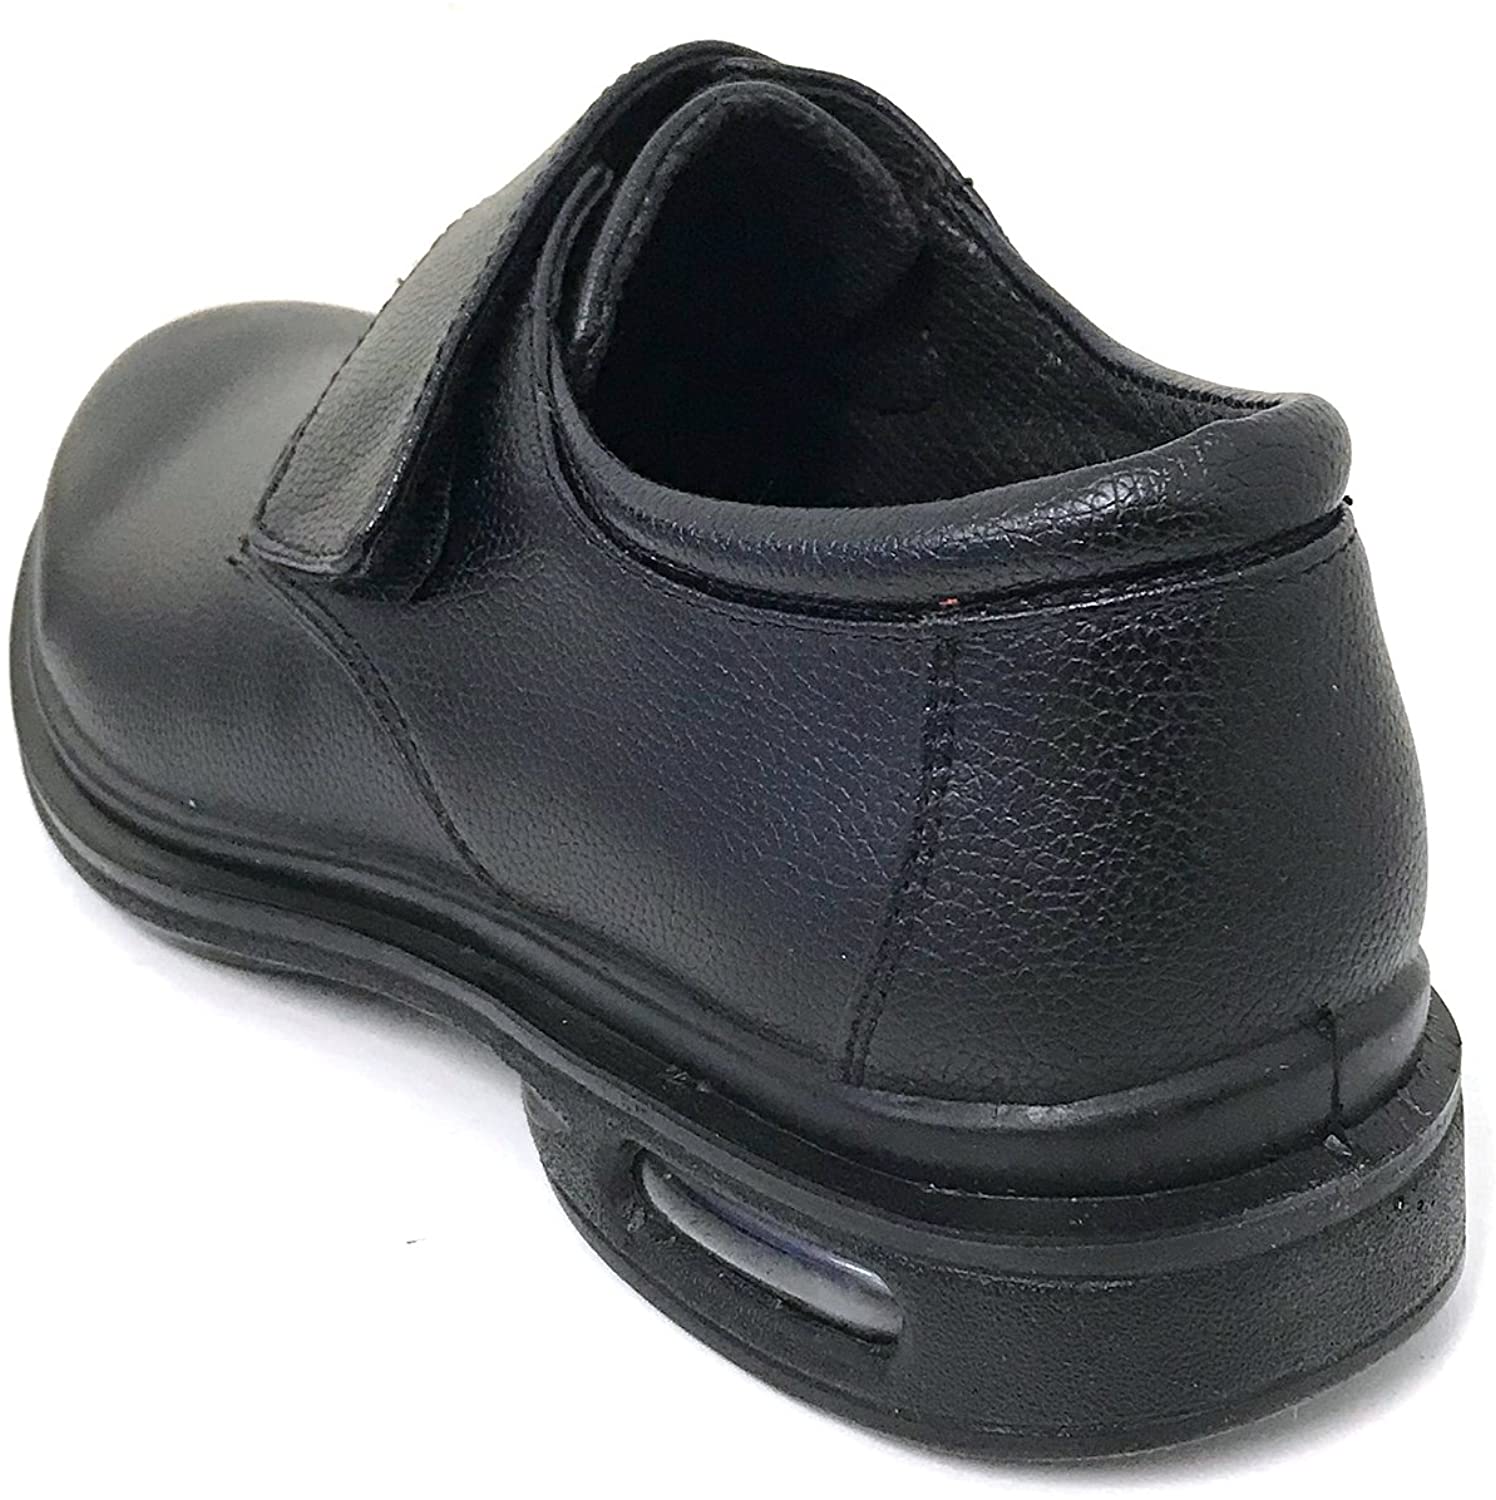 Men's Comfort Shoes Hook and Loop Air Cushion Slip Resistant Walking Restaurant Work Shoes - image 3 of 3